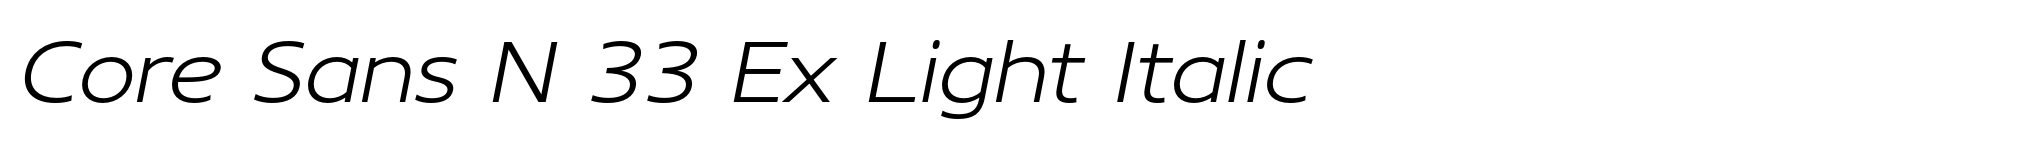 Core Sans N 33 Ex Light Italic image